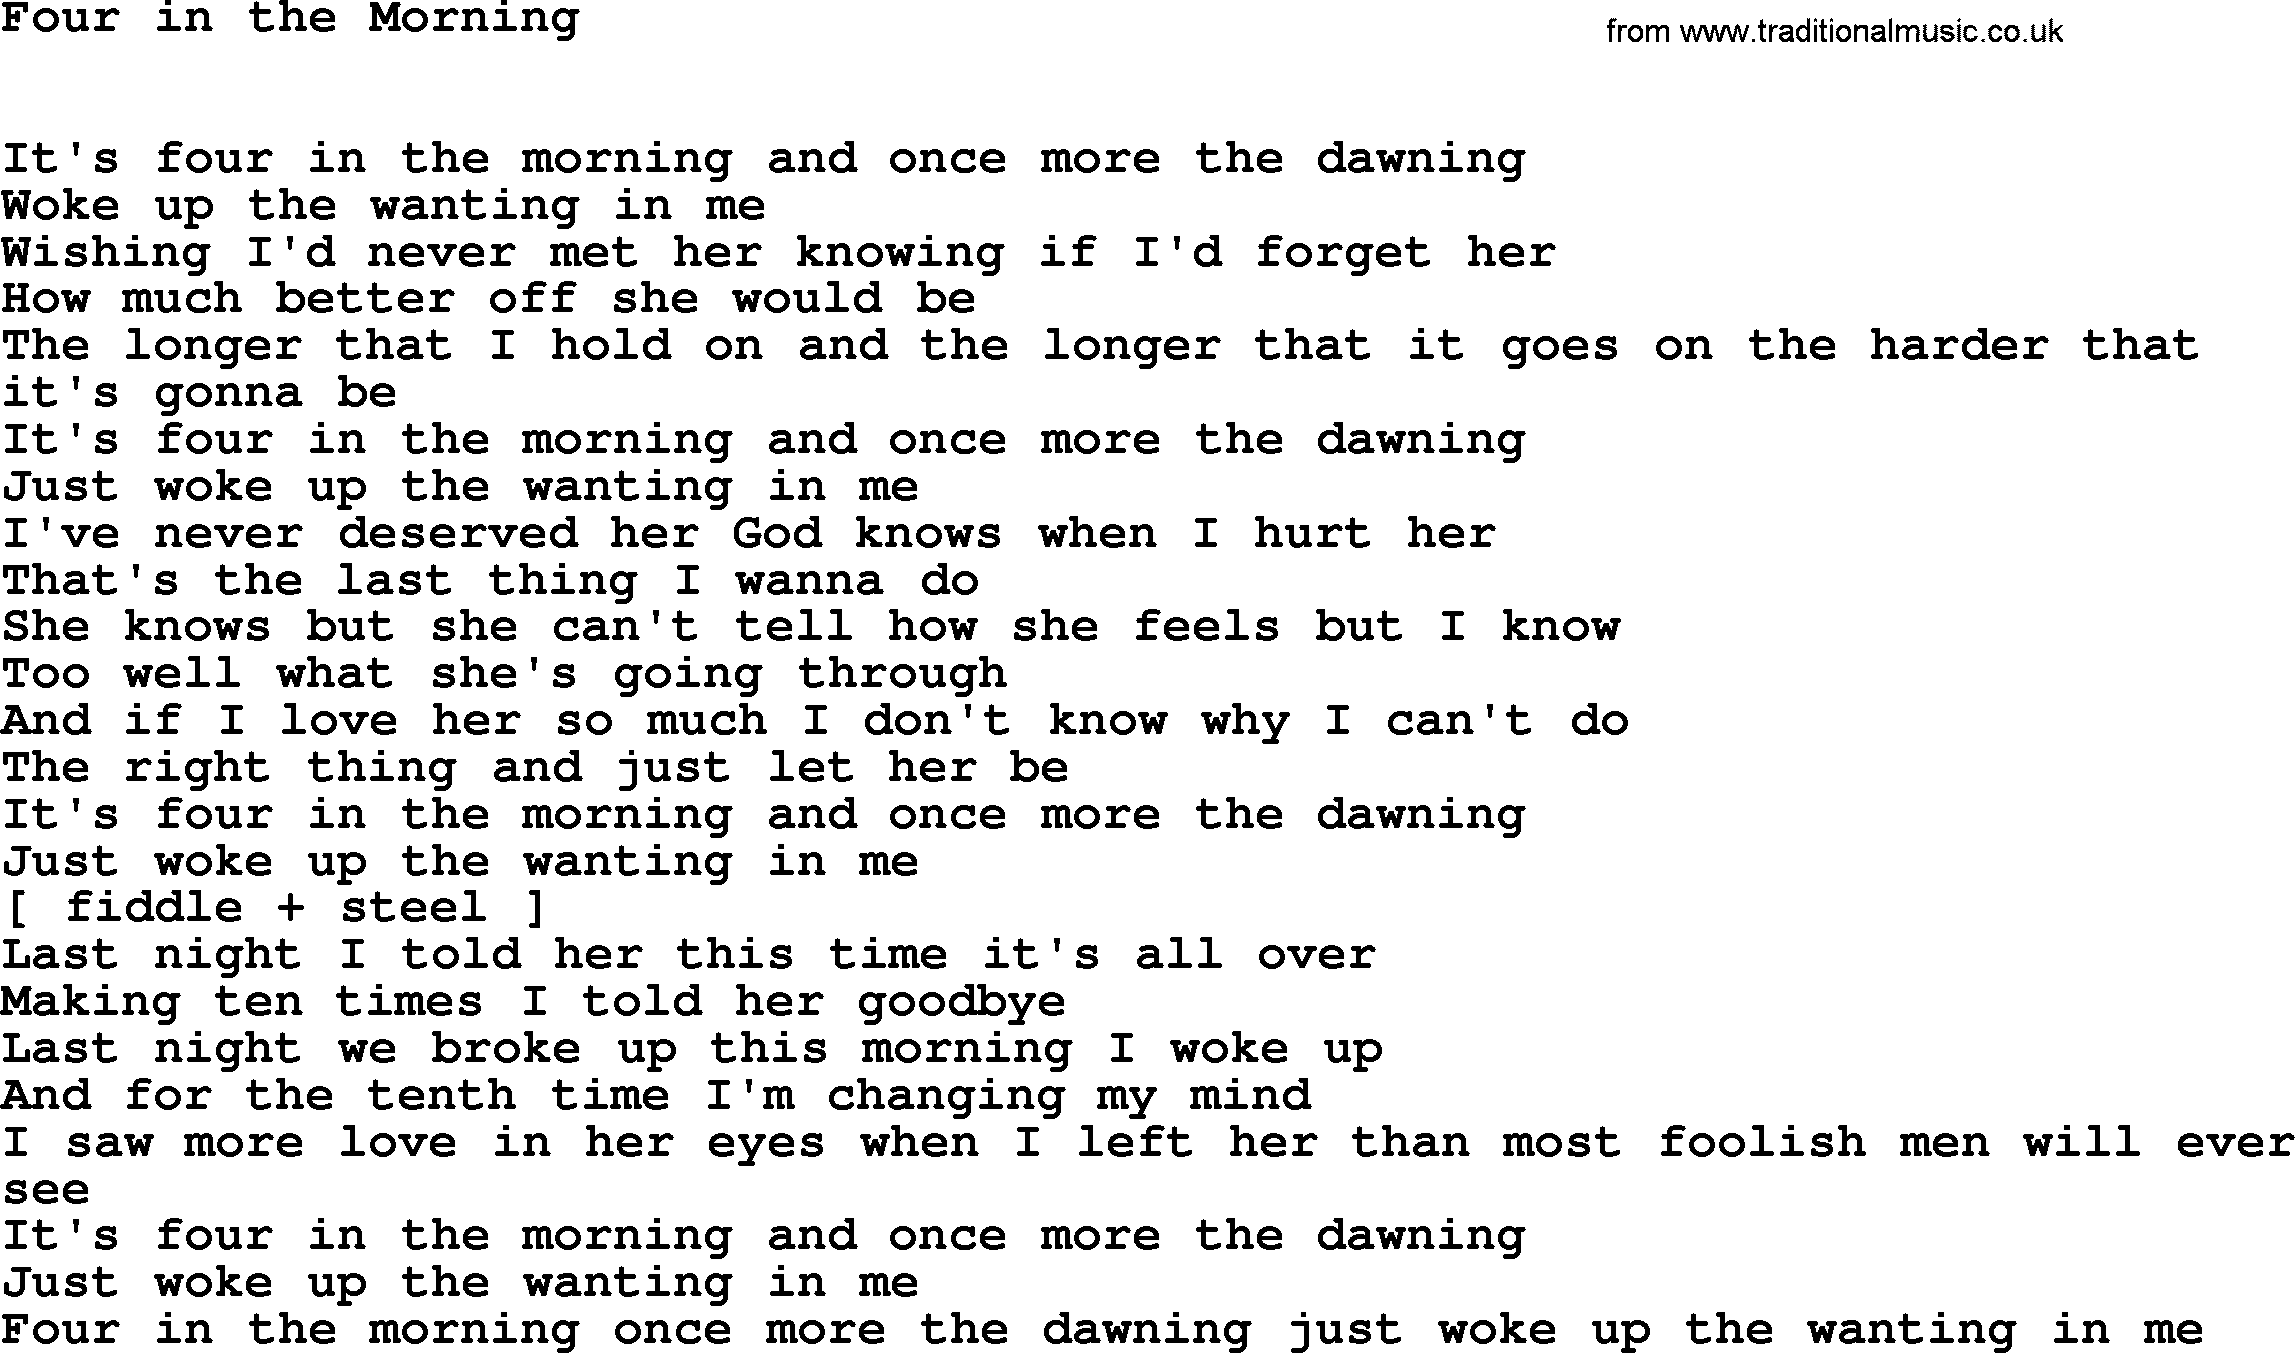 Willie Nelson song: Four in the Morning lyrics